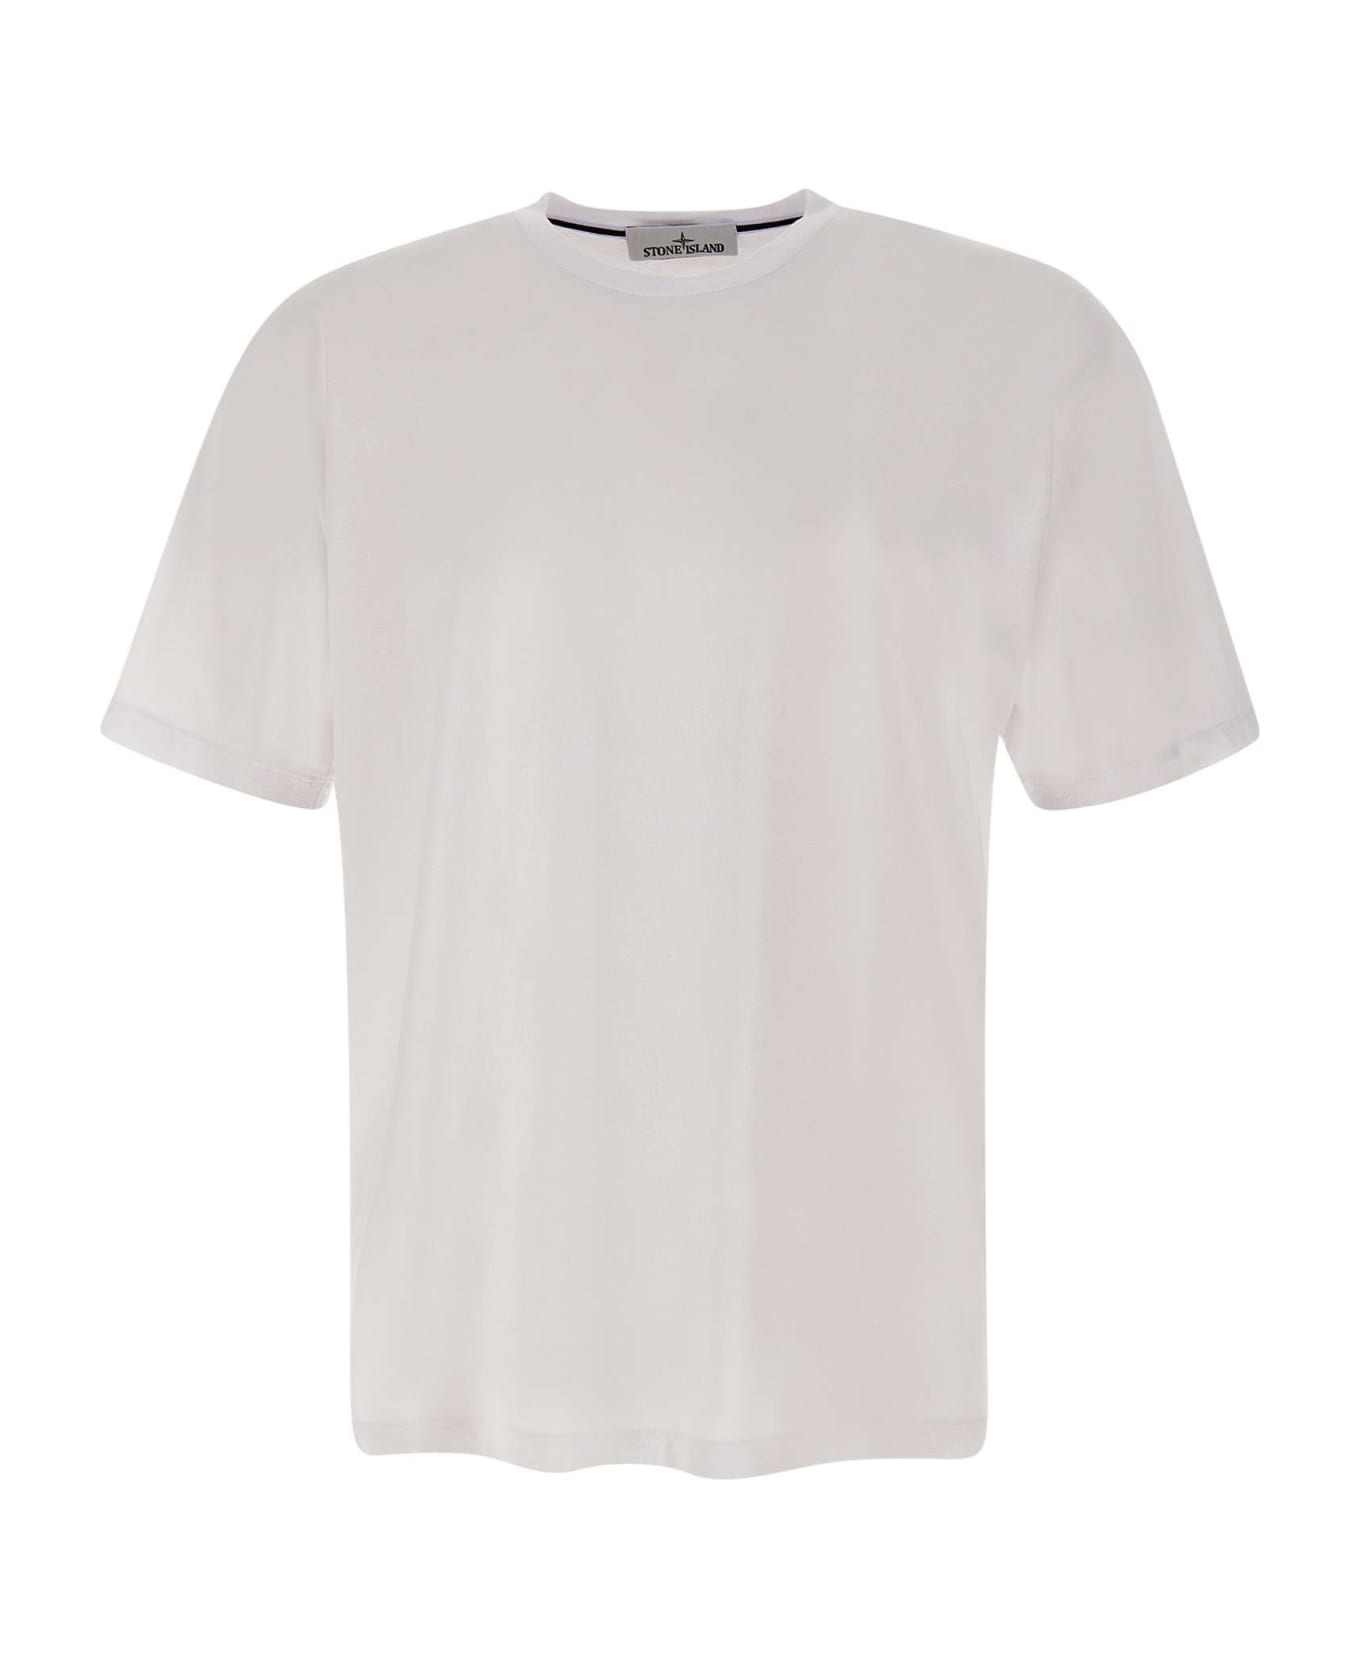 Stone Island Cotton T-shirt - WHITE